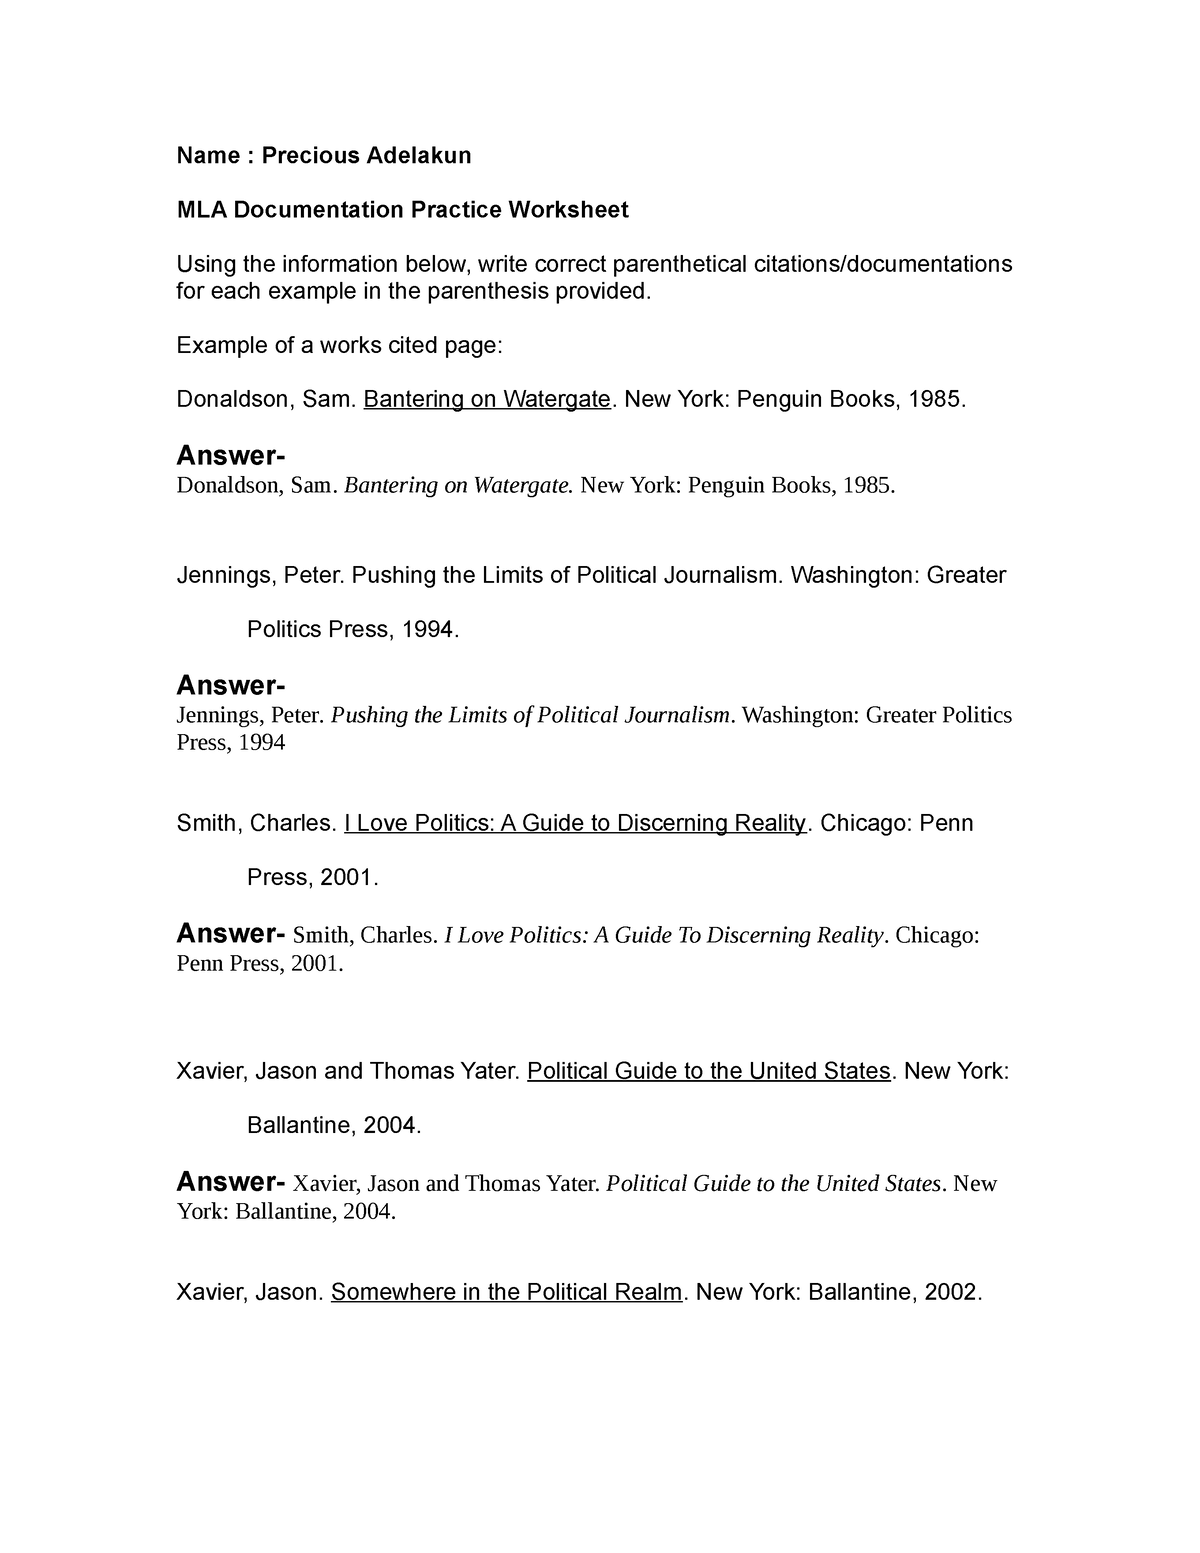 mla-documentation-practice-worksheet-10-copy-name-precious-adelakun